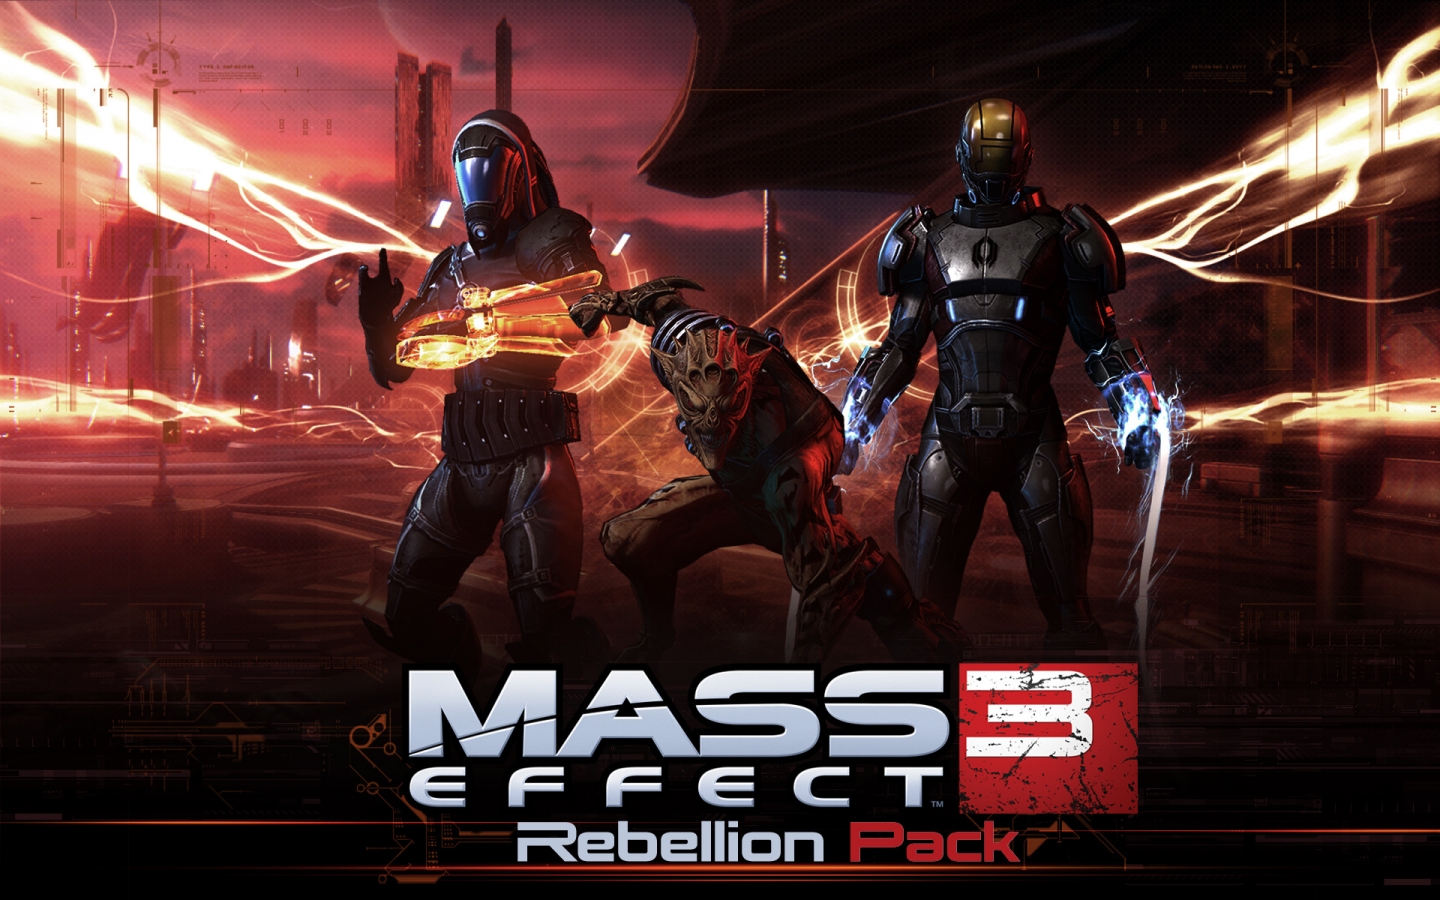 Mass Effect 3 Rebellion Pack for 1440 x 900 widescreen resolution